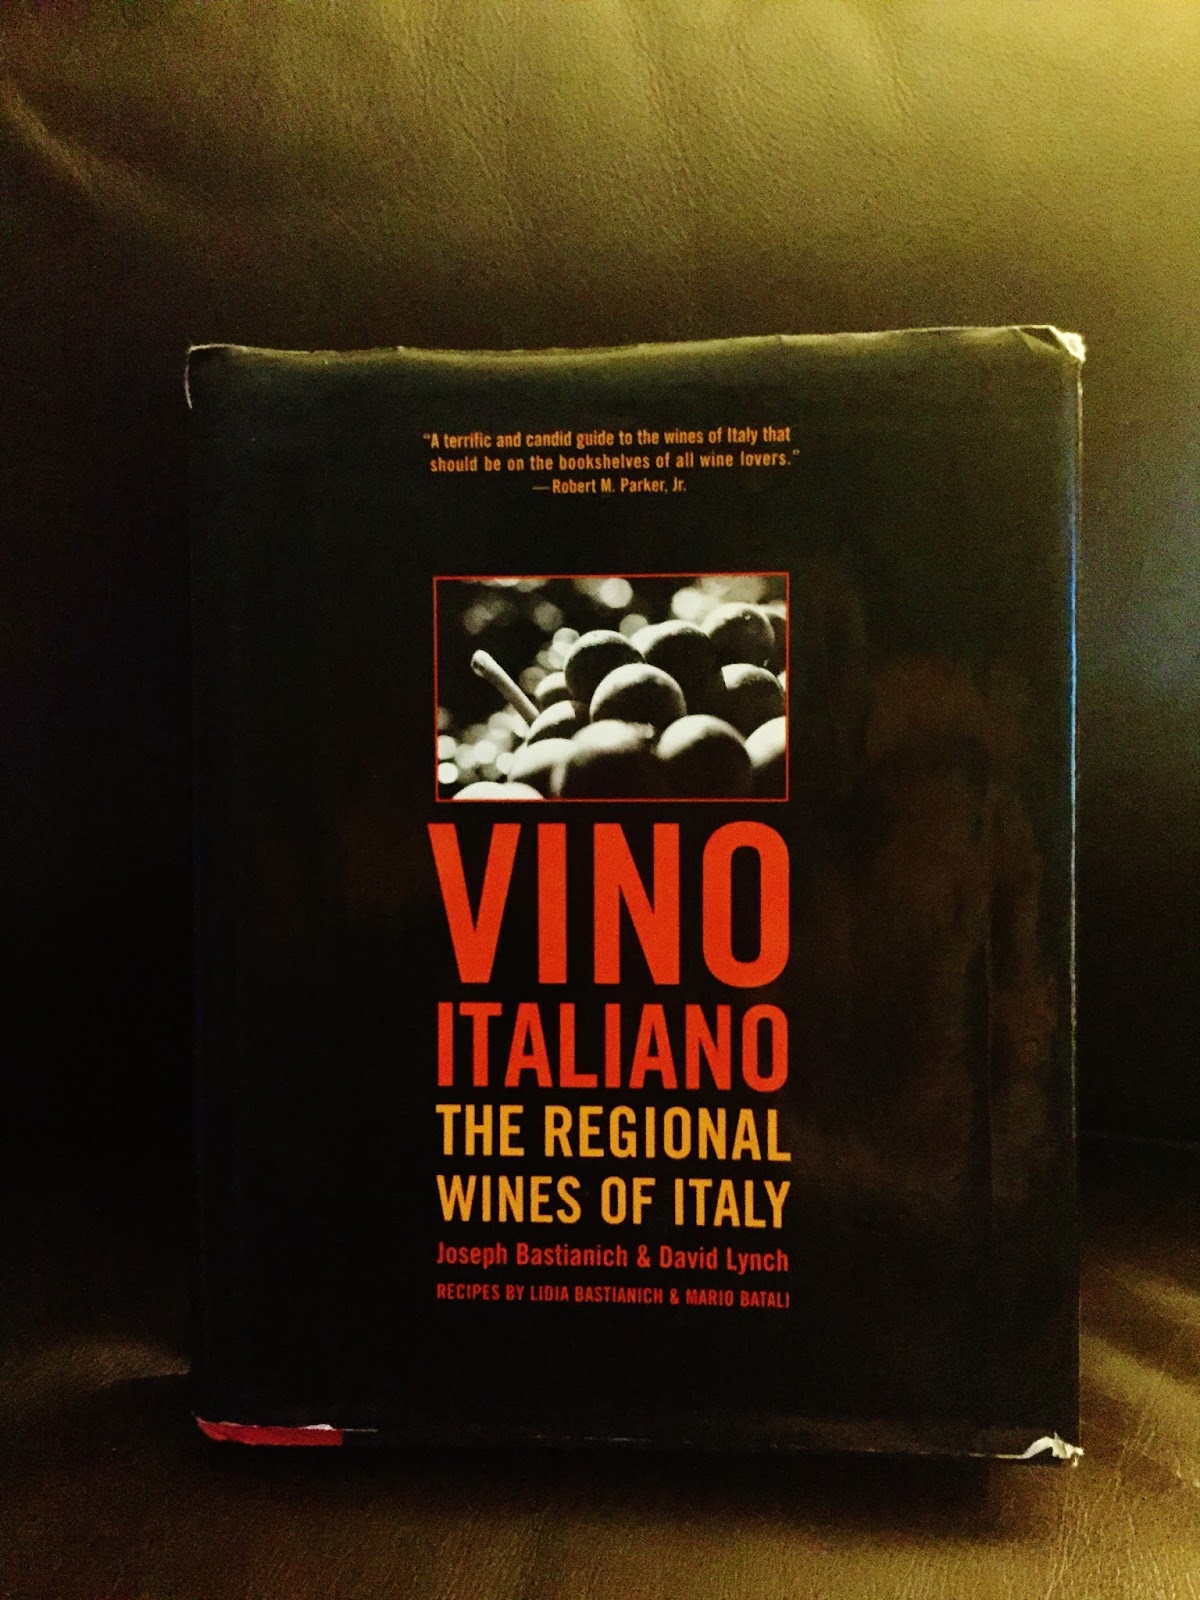 Vino Travels ~ An Italian Wine Blog: Top picks for Italian Wine Books